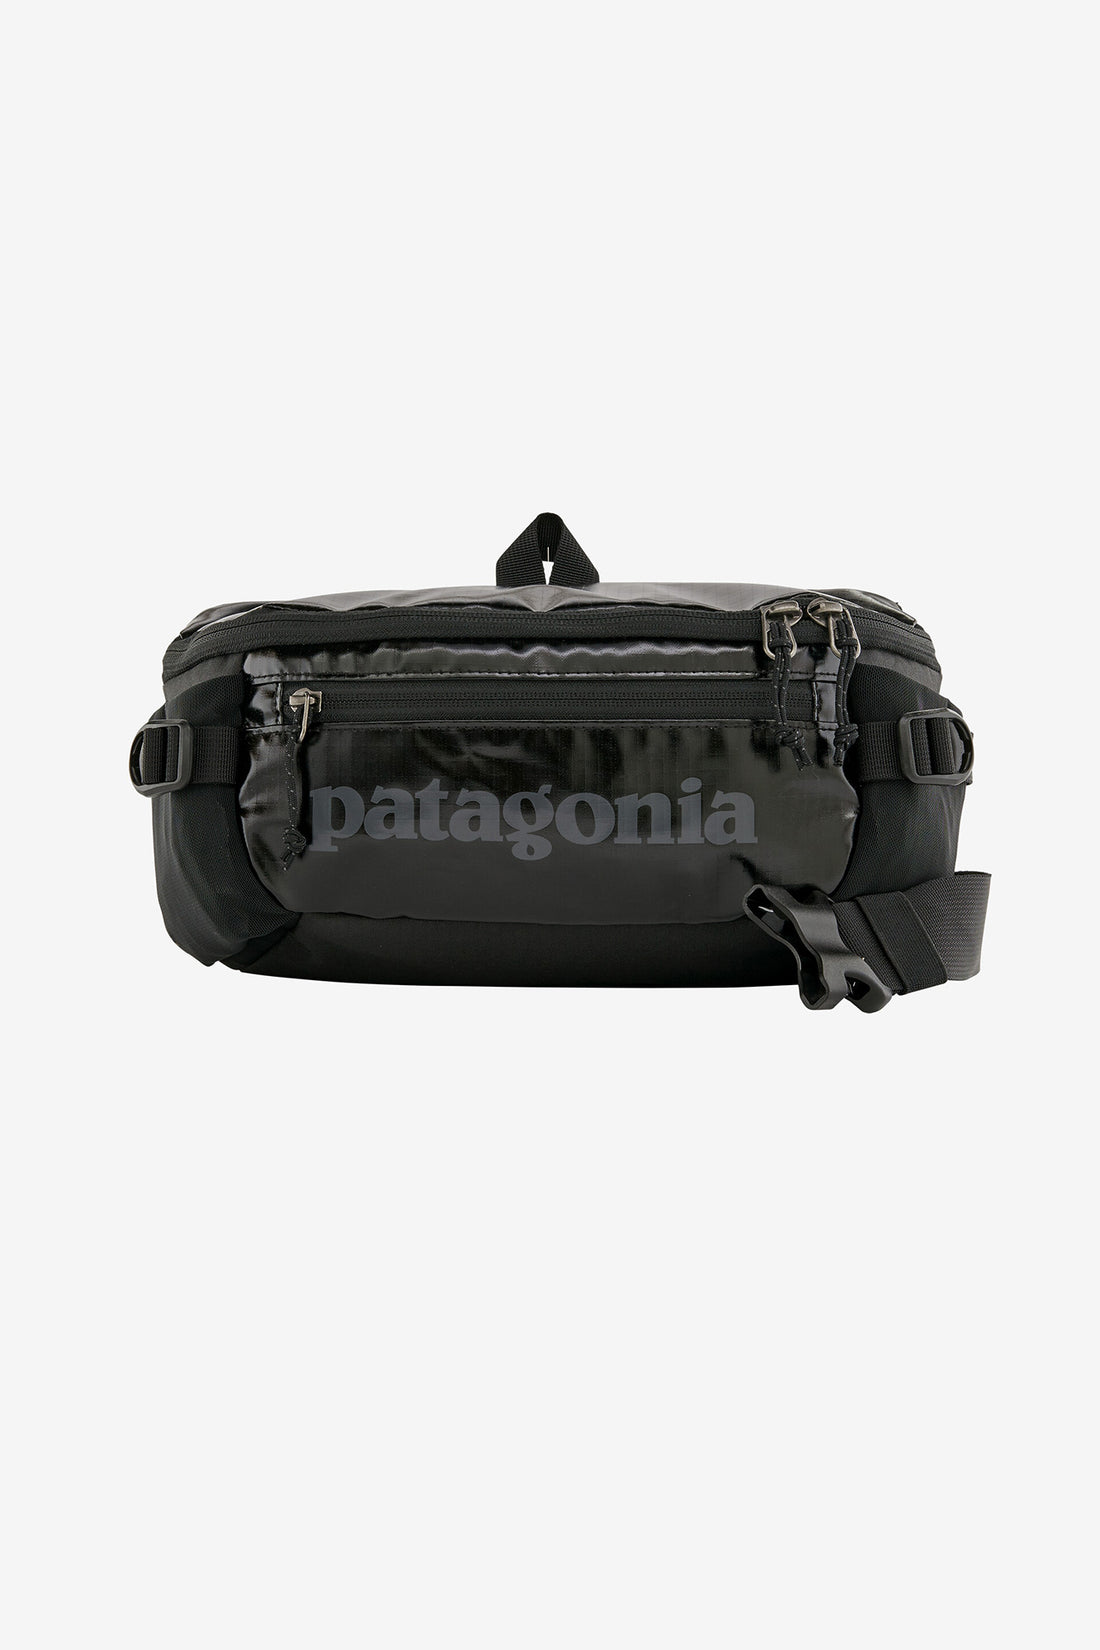 PATAGONIA BLACK HOLE WAIST PACK 5L - BLACK BAG PATAGONIA   